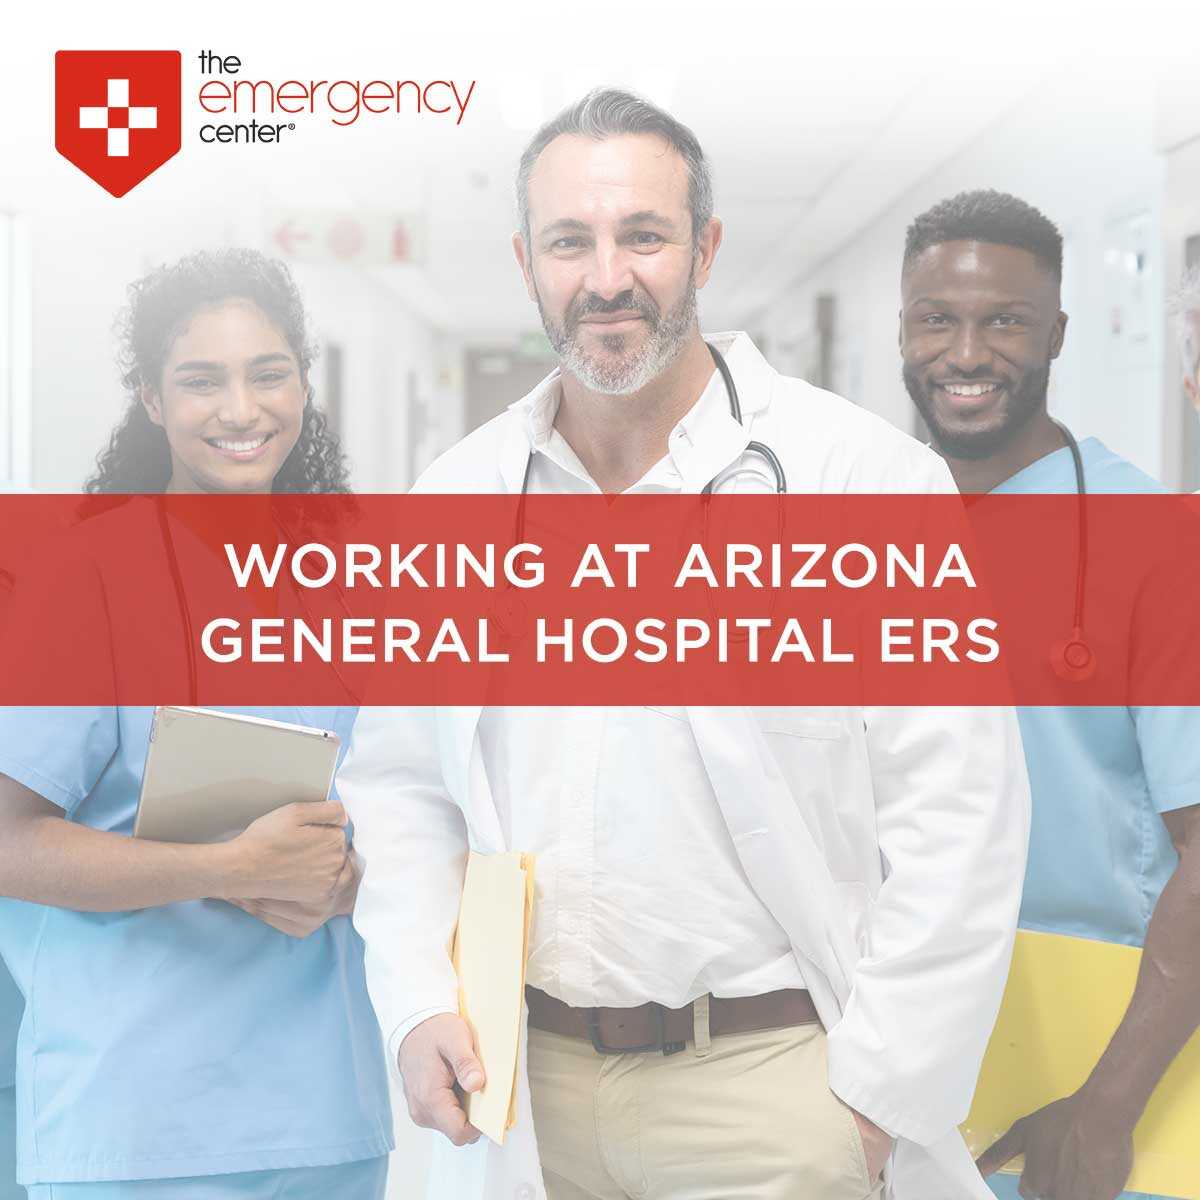 Arizona General Hospital ERs - The Emergency Center